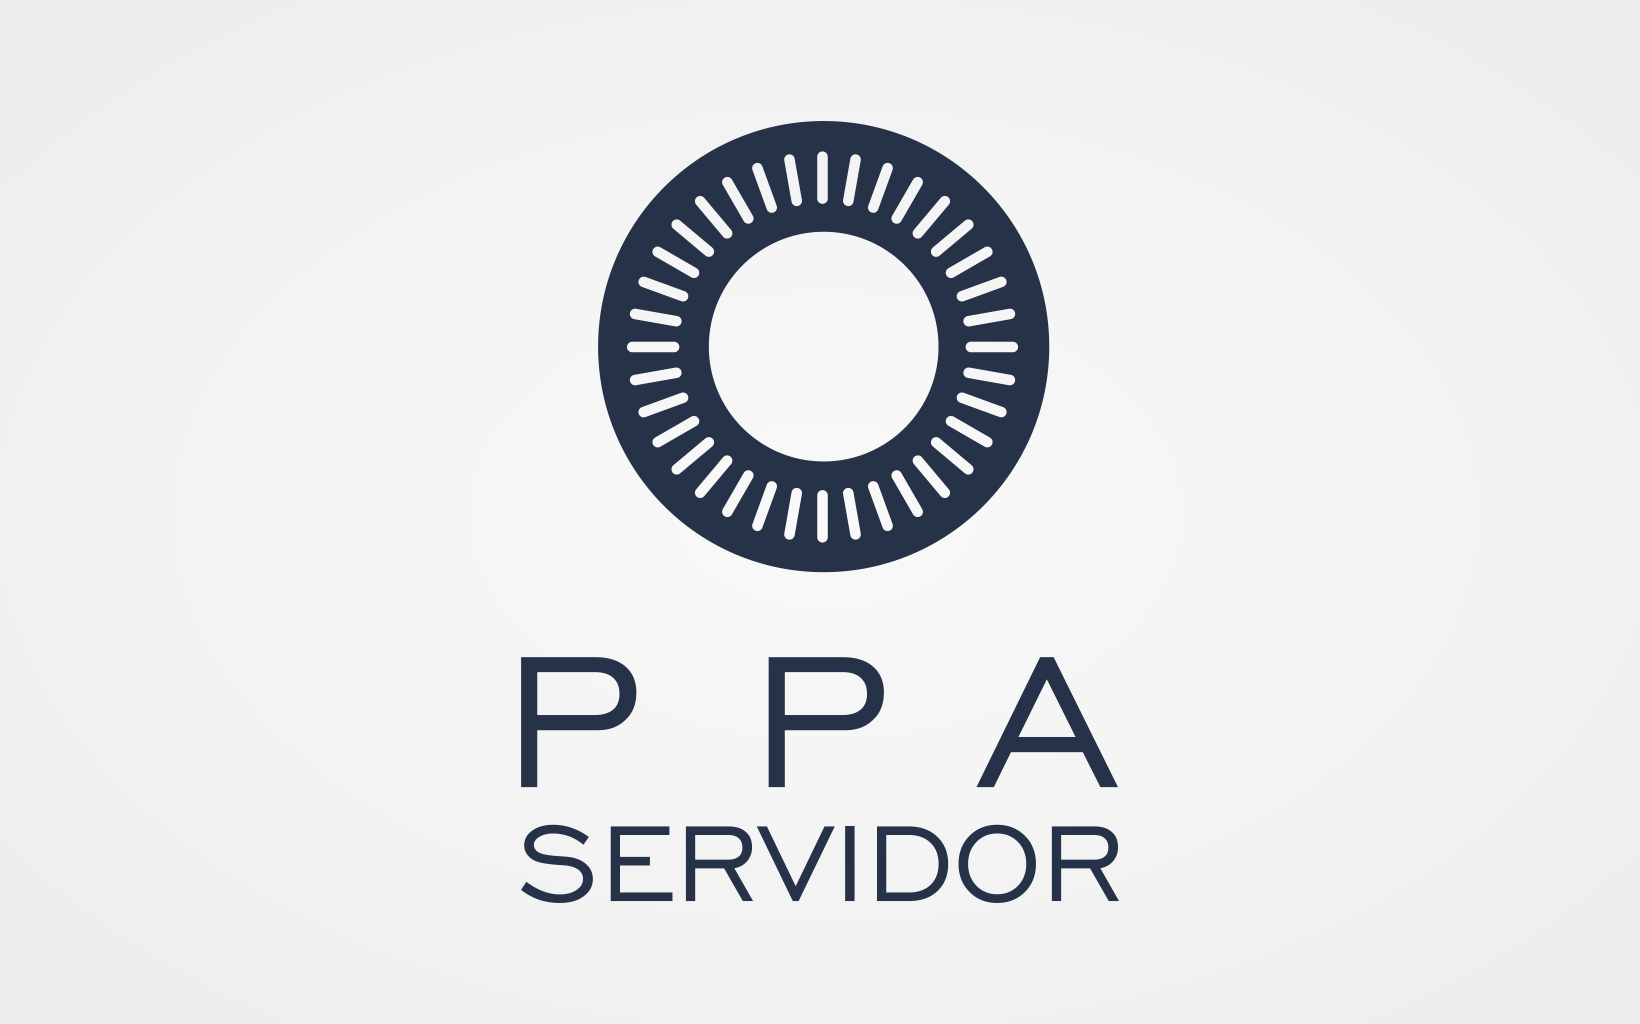 PPA Servidor - SEDUC - Turma 3